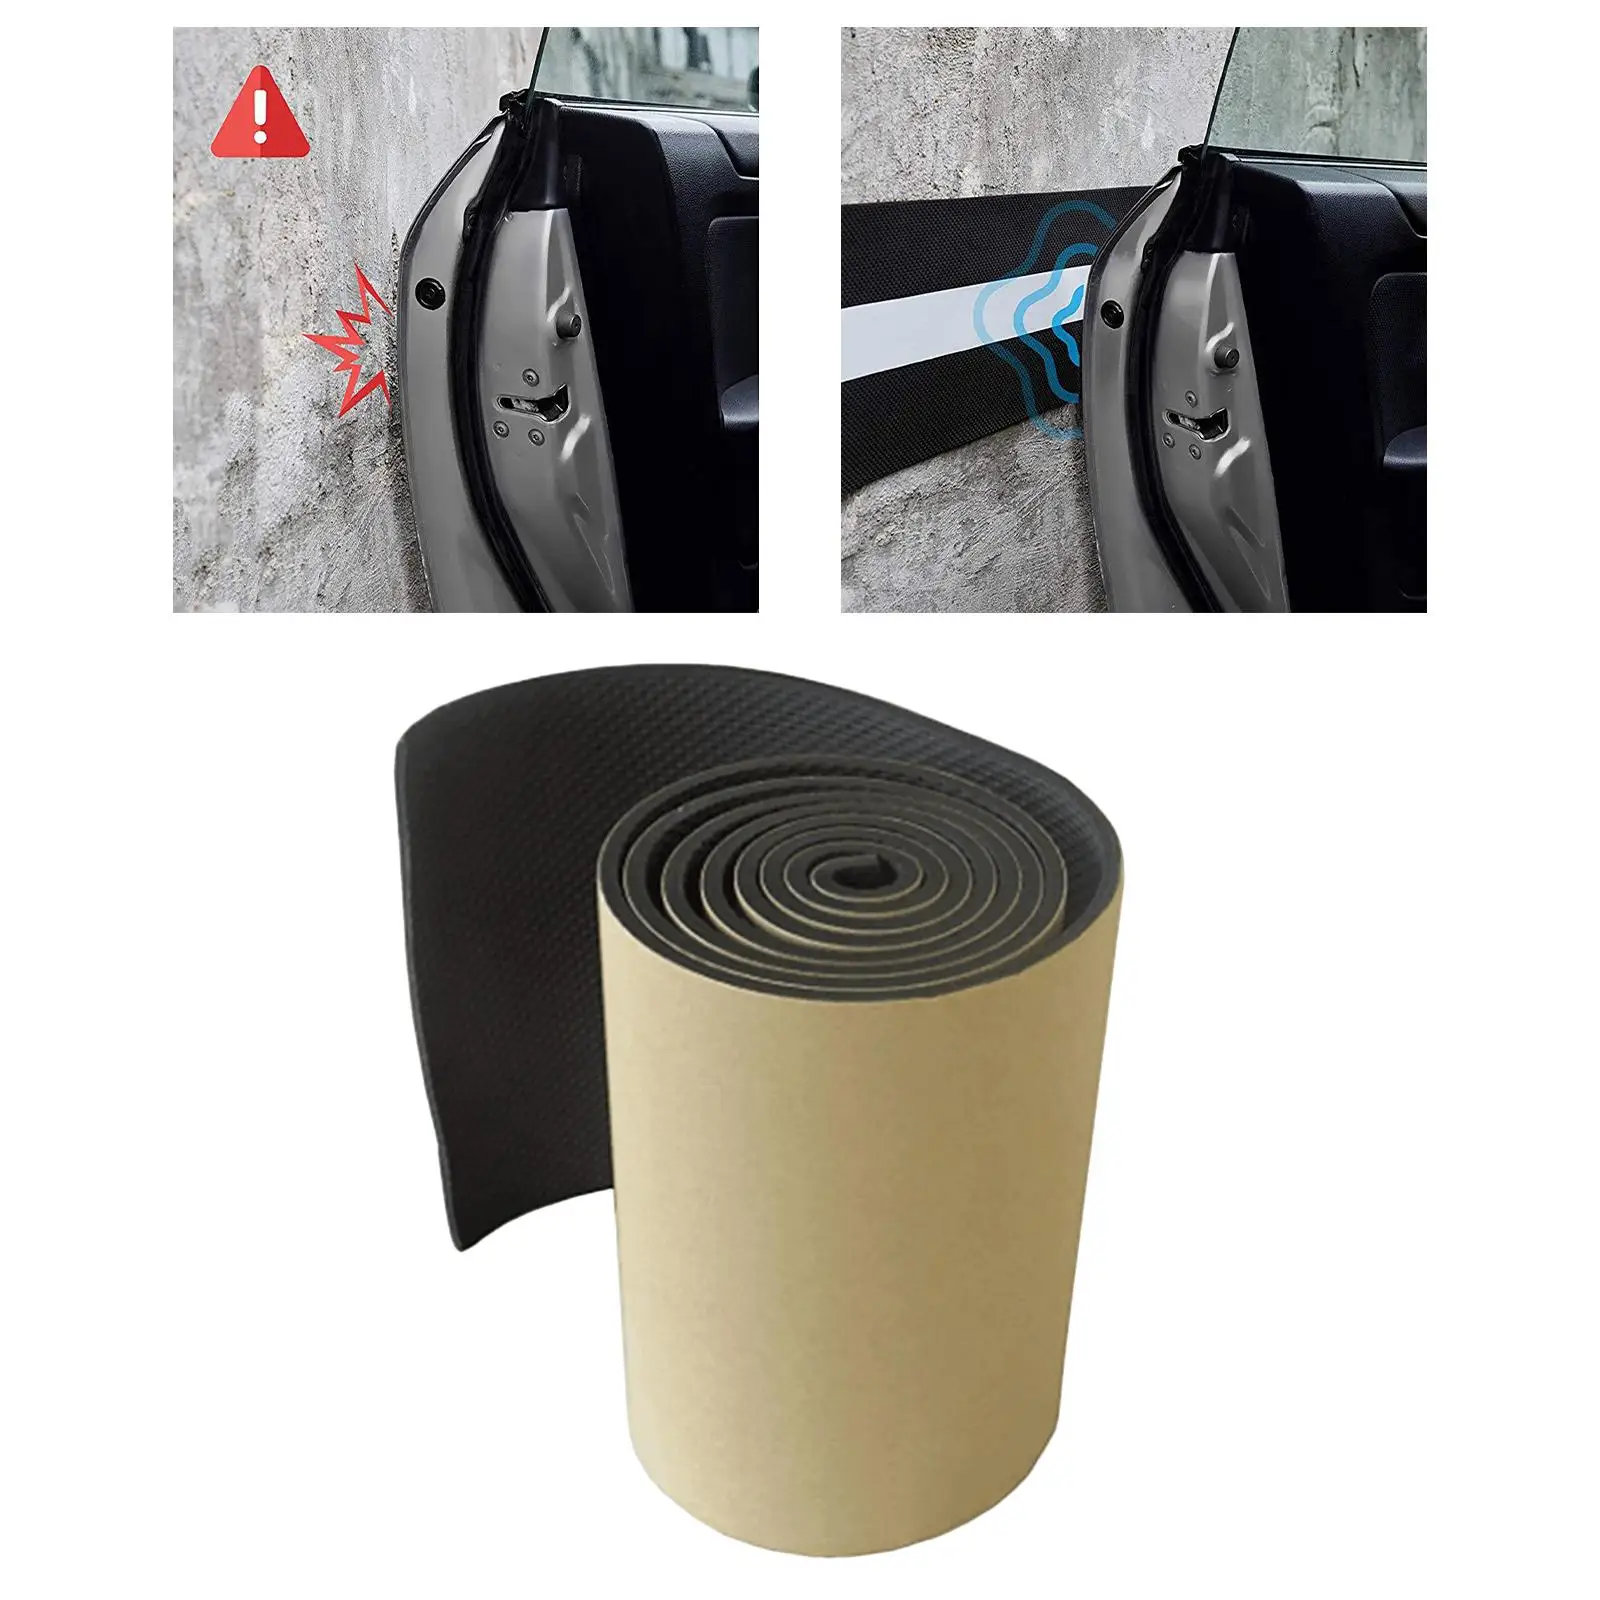 Garage Wall Protector, guard, Black, Self Adhesive, EVA Protect 200Cmx20Cmx0.4cm, Abrasion Resistant ,for Garages Car Park